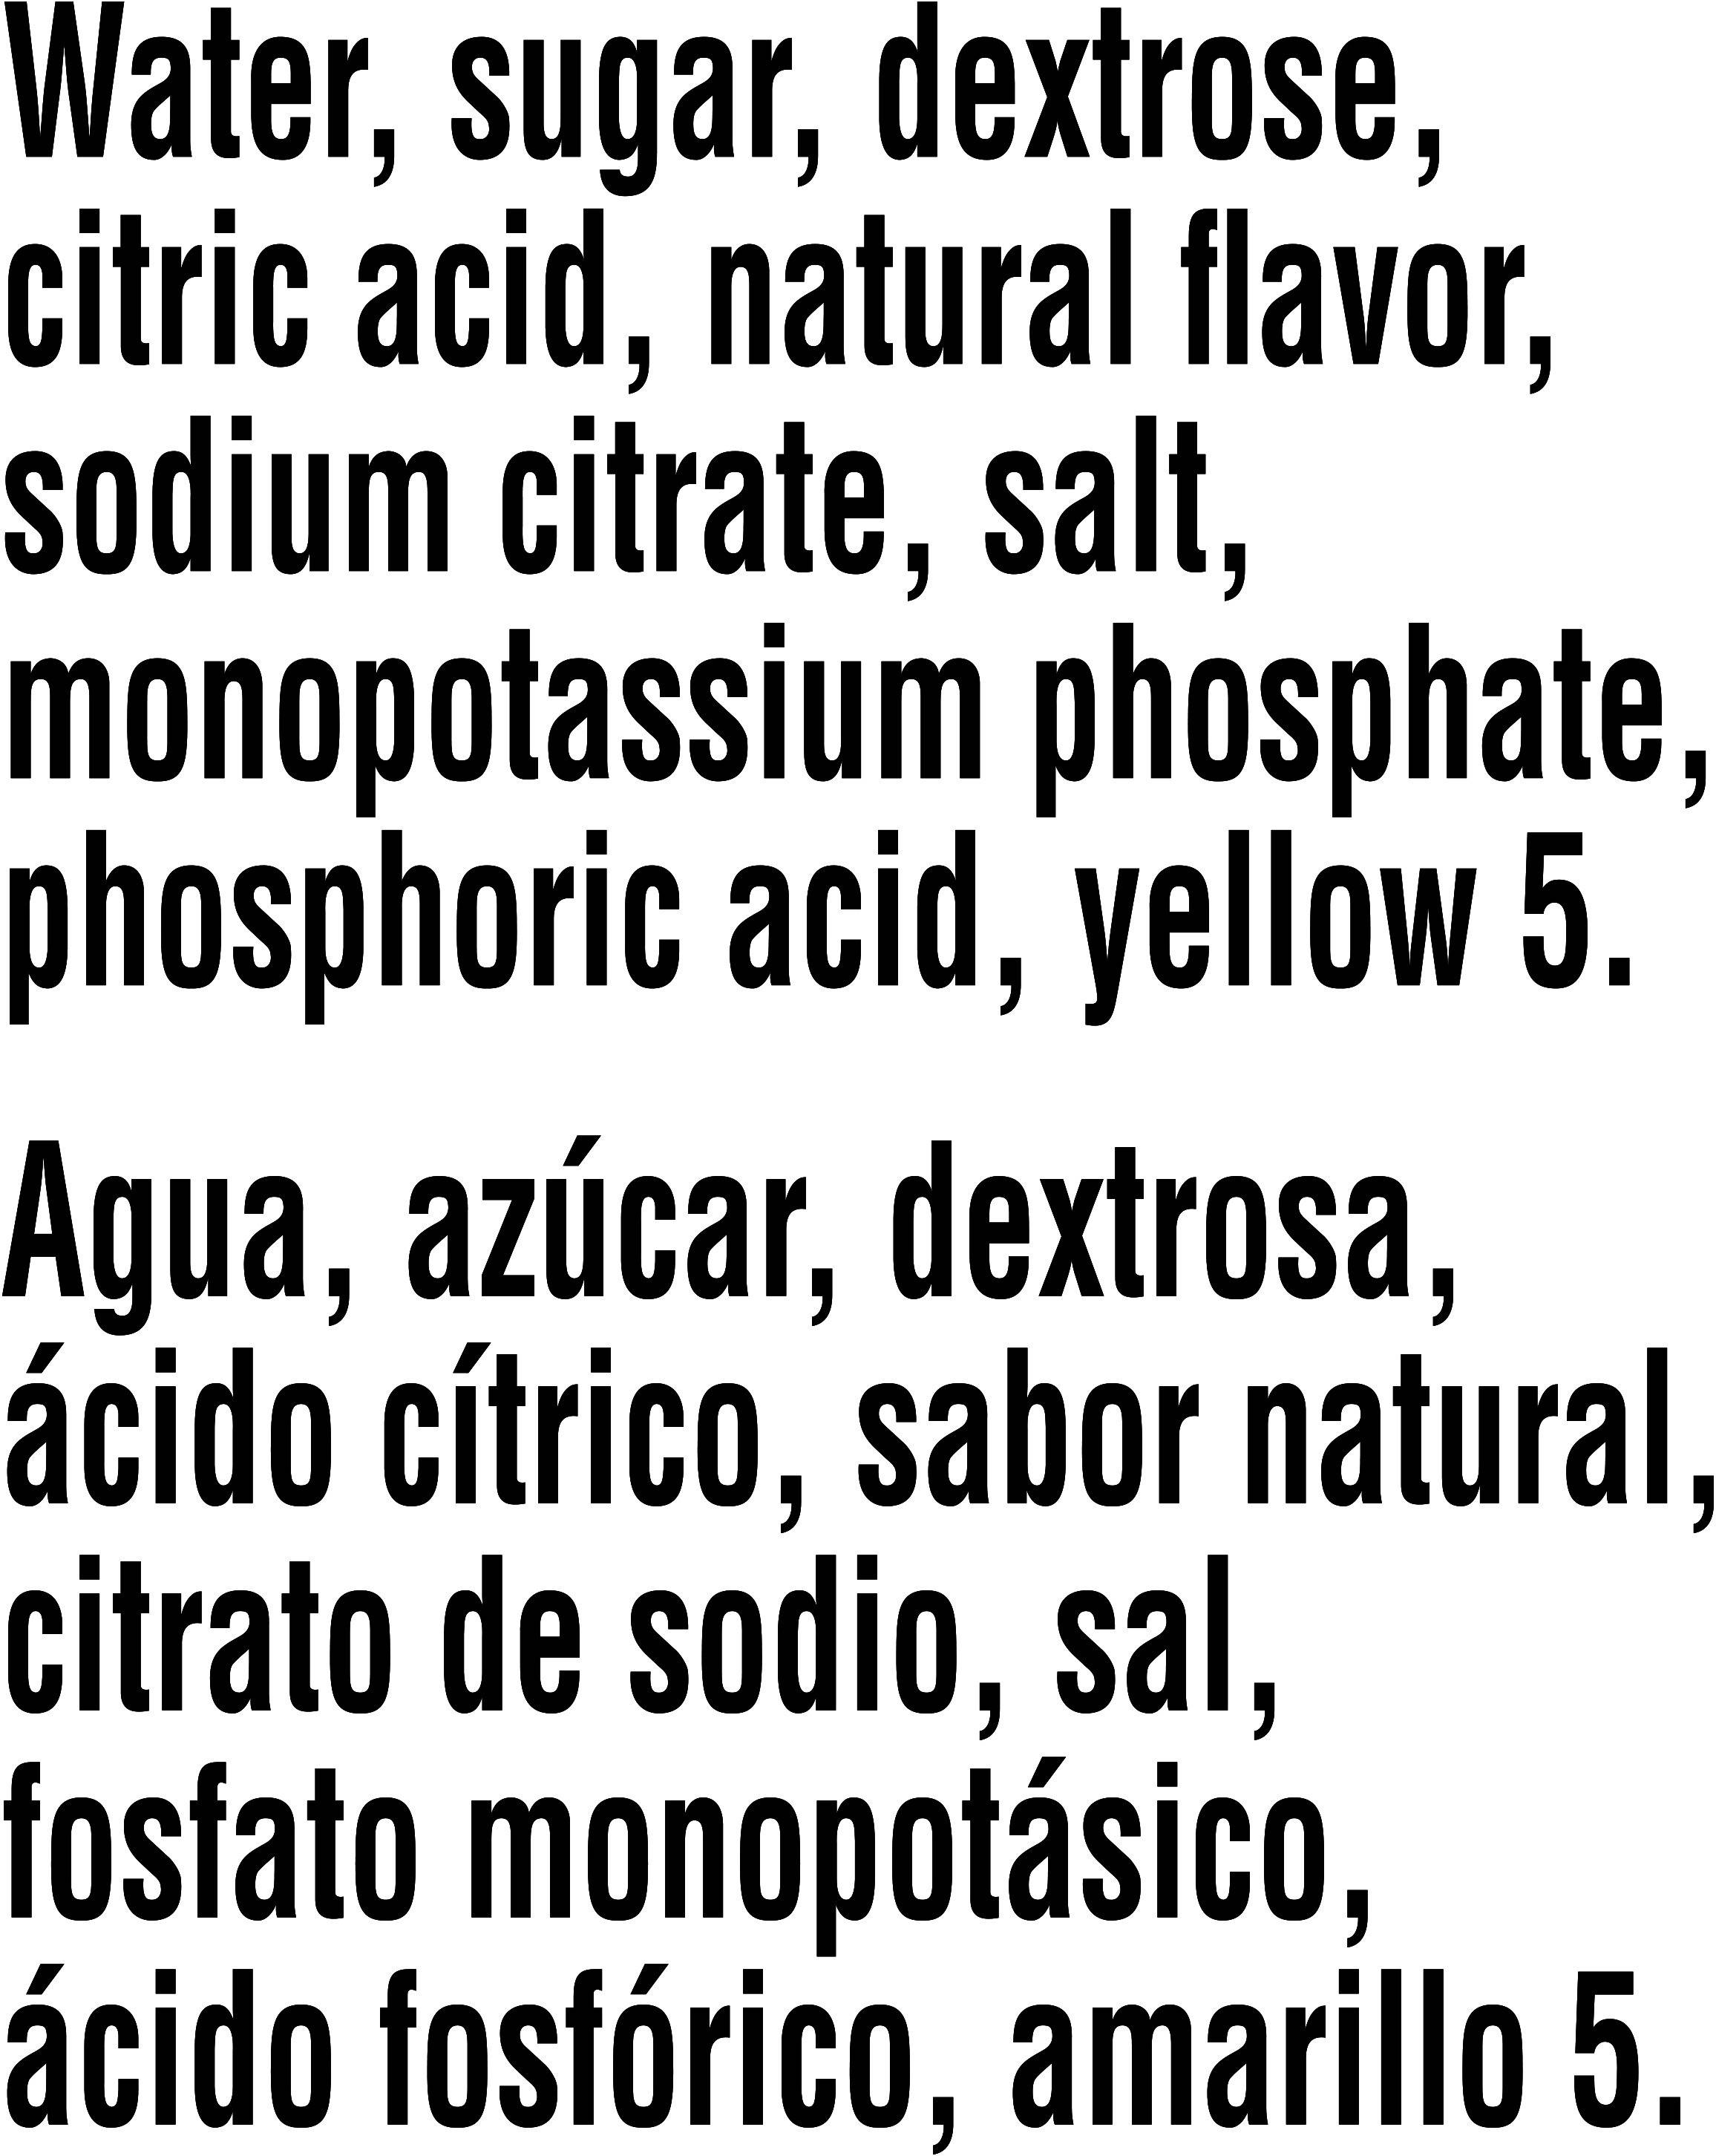 Image describing nutrition information for product Gatorade Flow Pineapple Mango